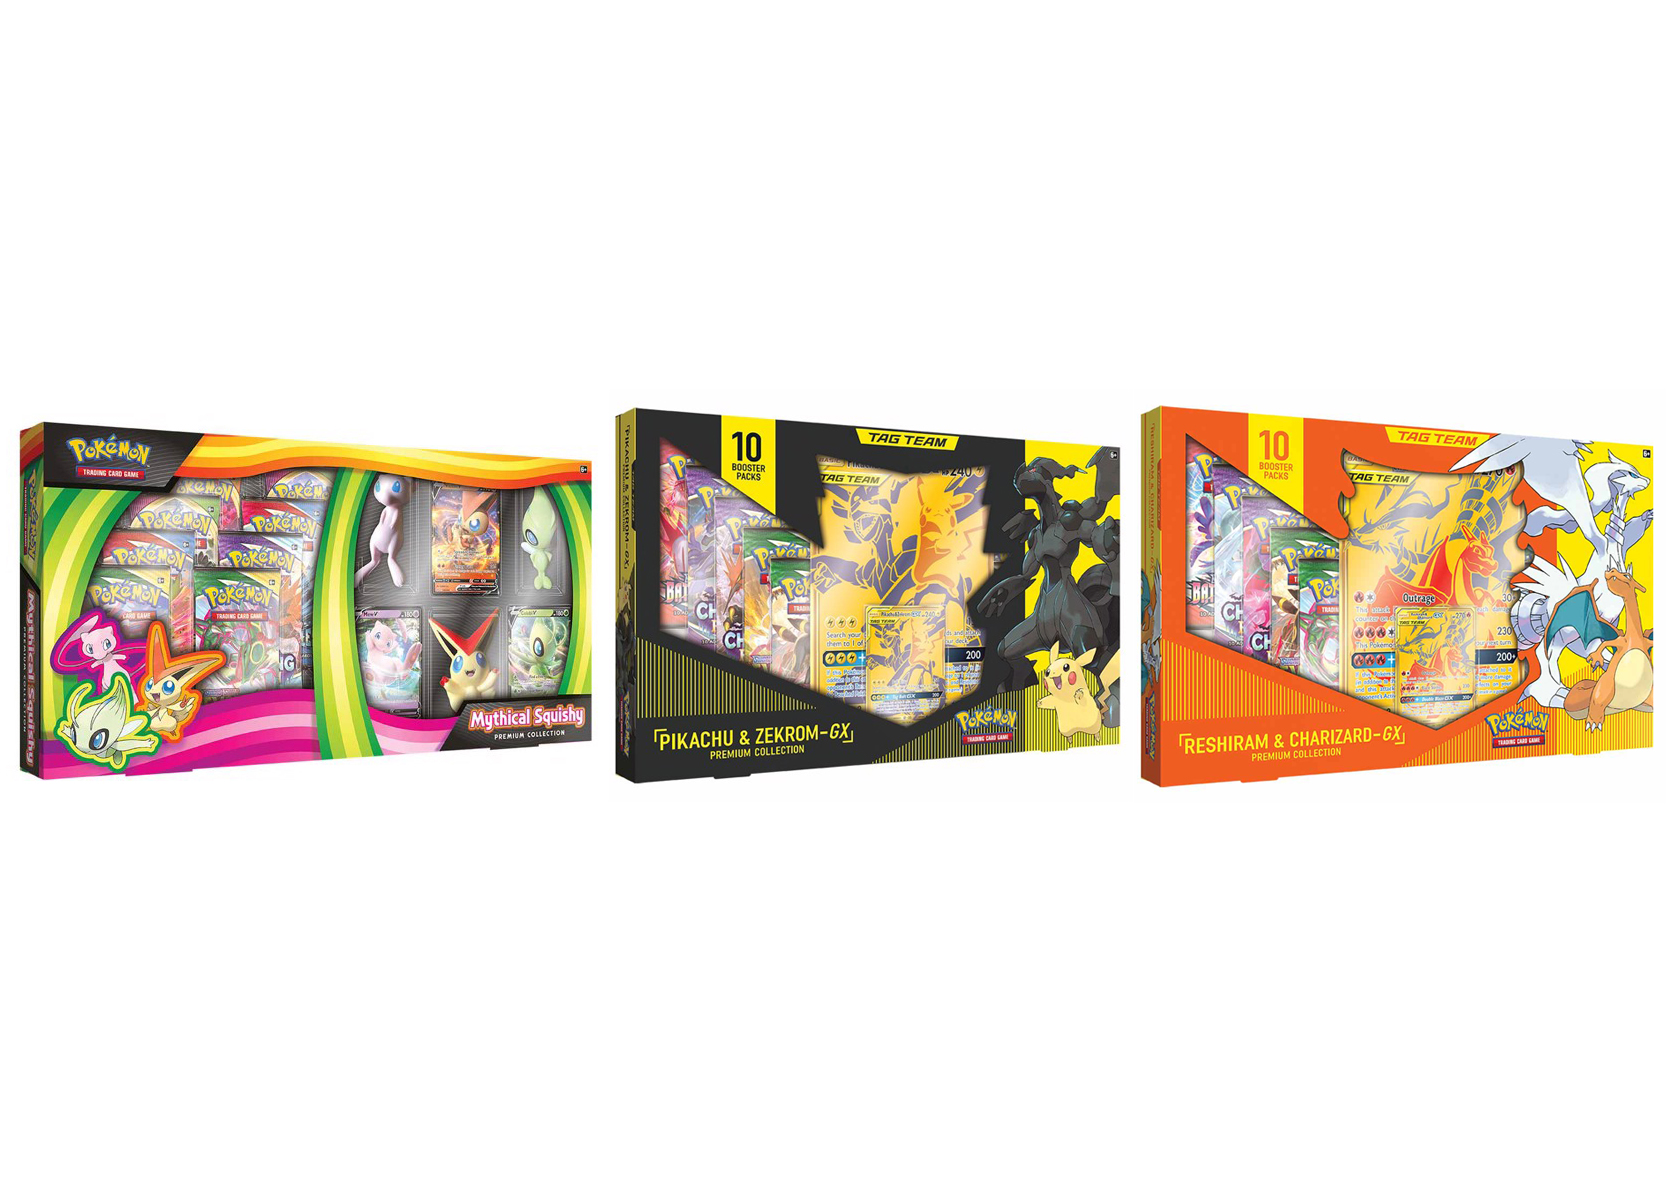 Pokémon TCG Premium Collection Mythical Squishy/Reshiram &  Charizard/Pikachu & Zekrom 3x Box Bundle